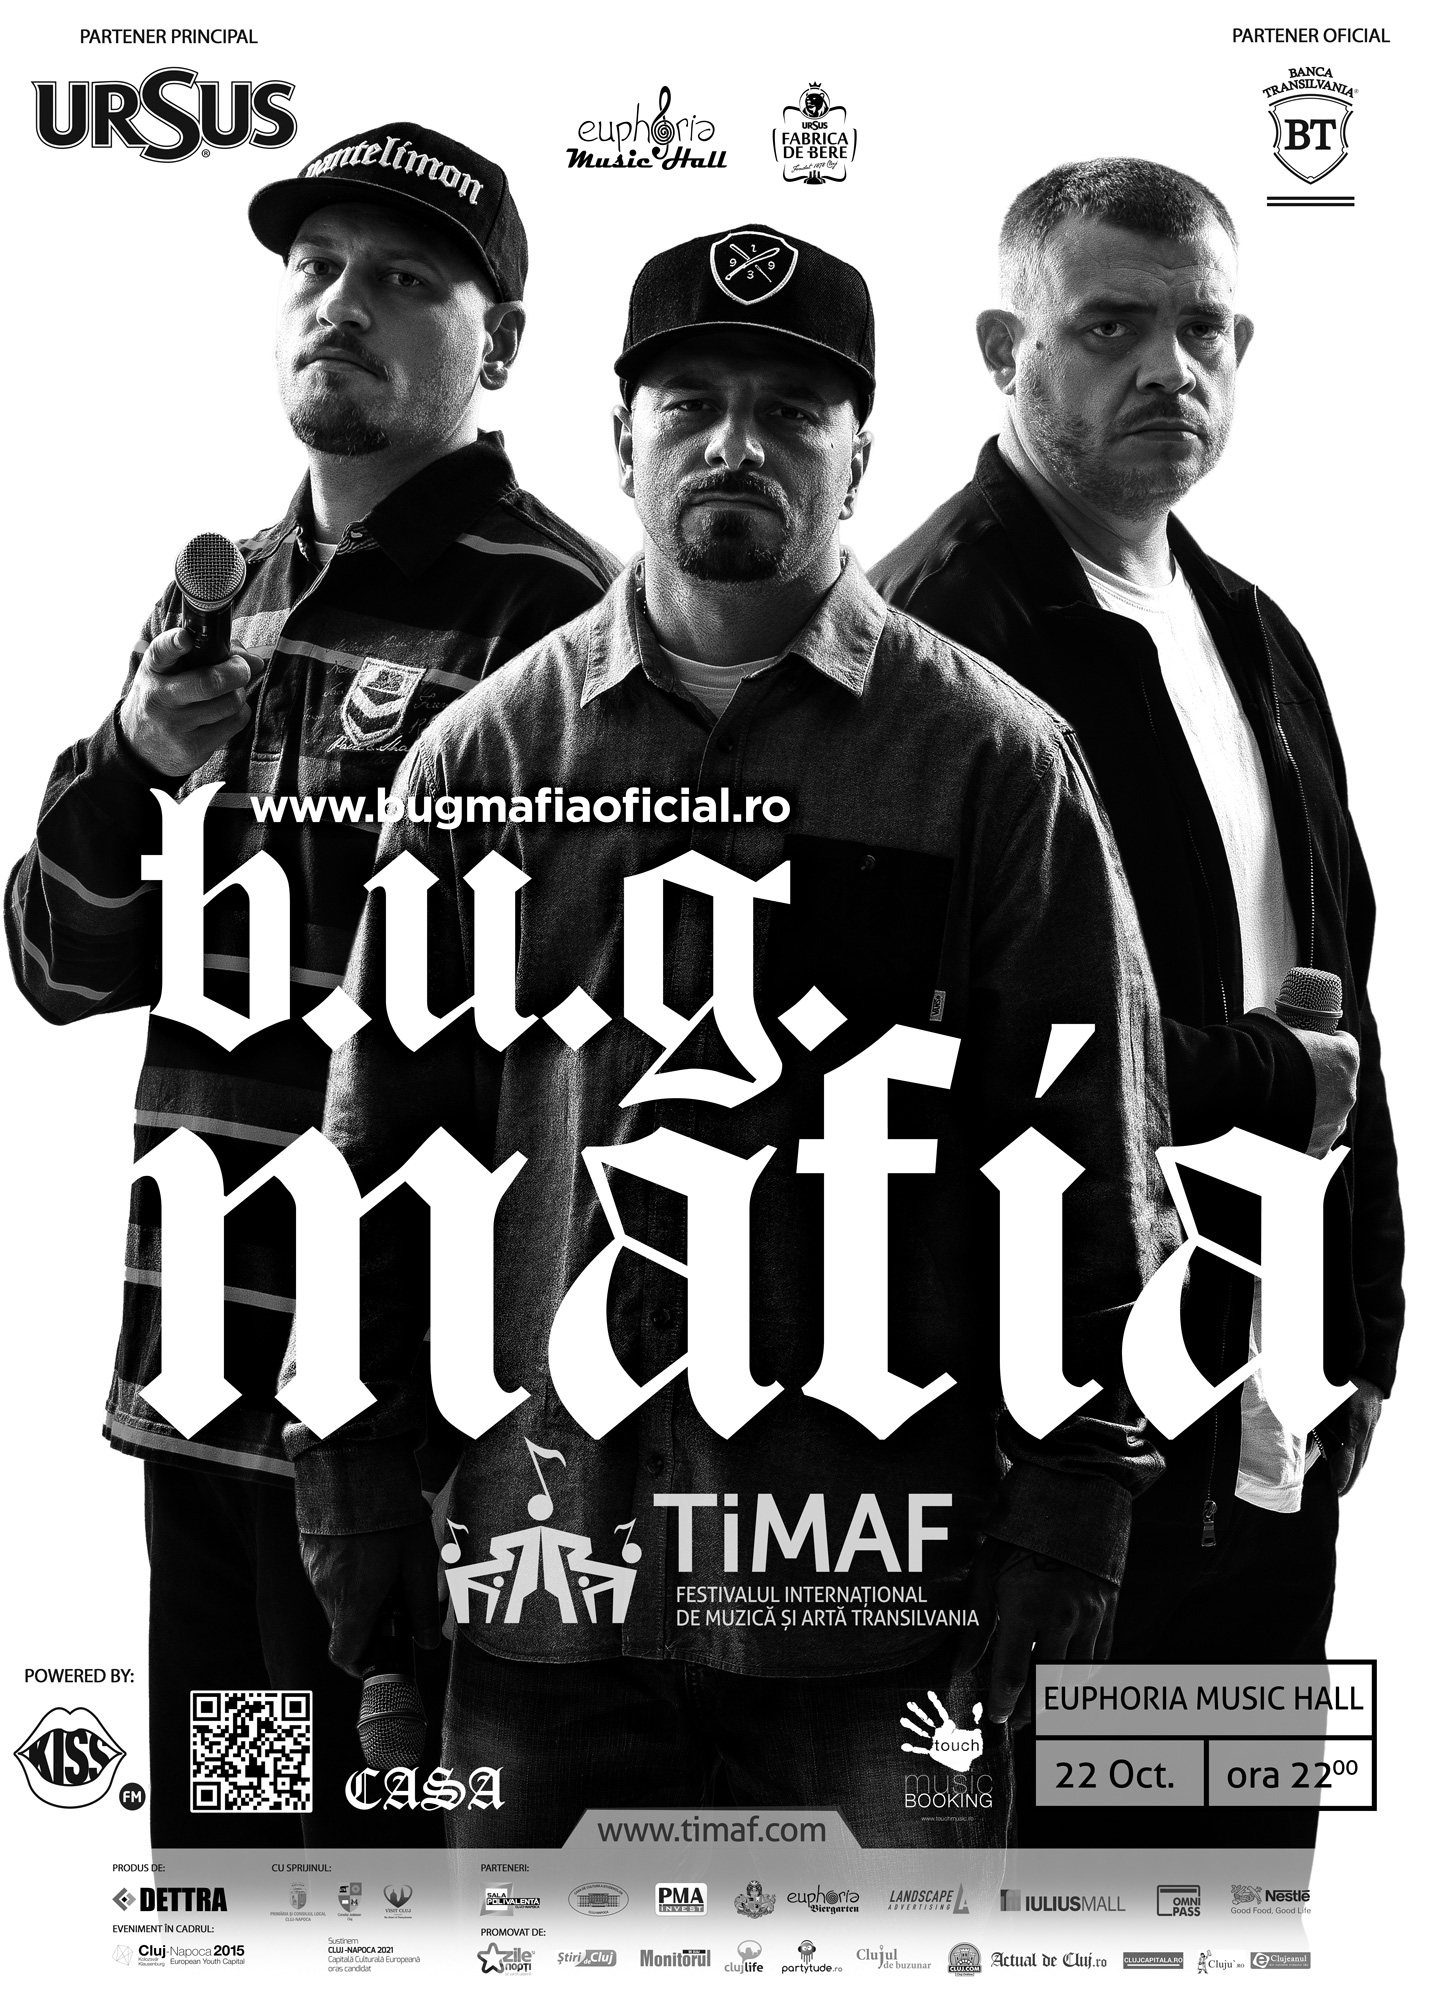 Concert B.U.G. Mafia @ Euphoria Music Hall